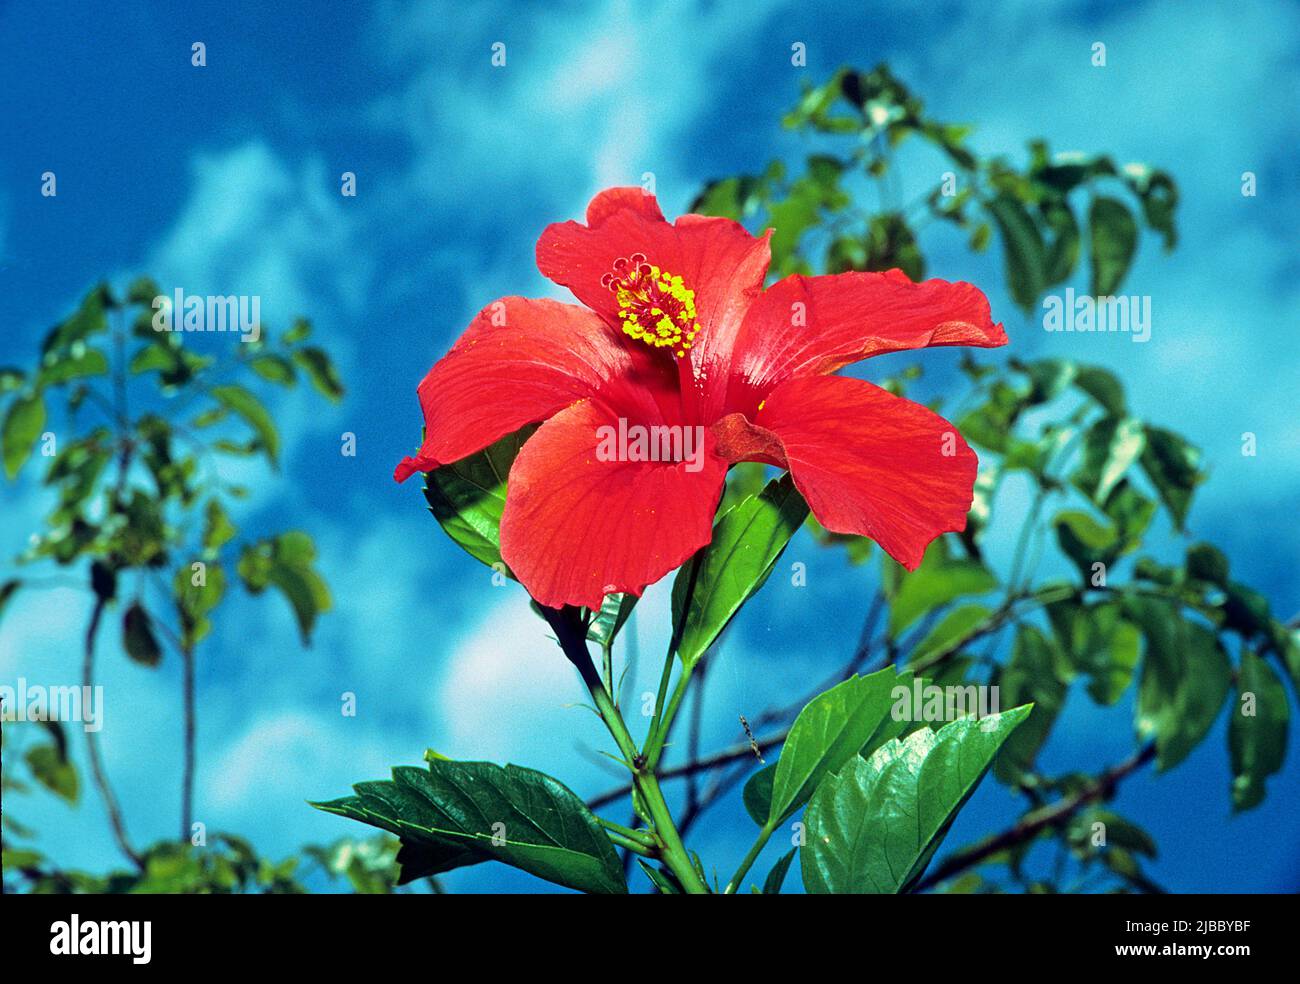 Rosa cinese (Hibiscus rosa-sinensis), Valle de Vinales, Pinar del Rio, Cuba, Caraibi Foto Stock